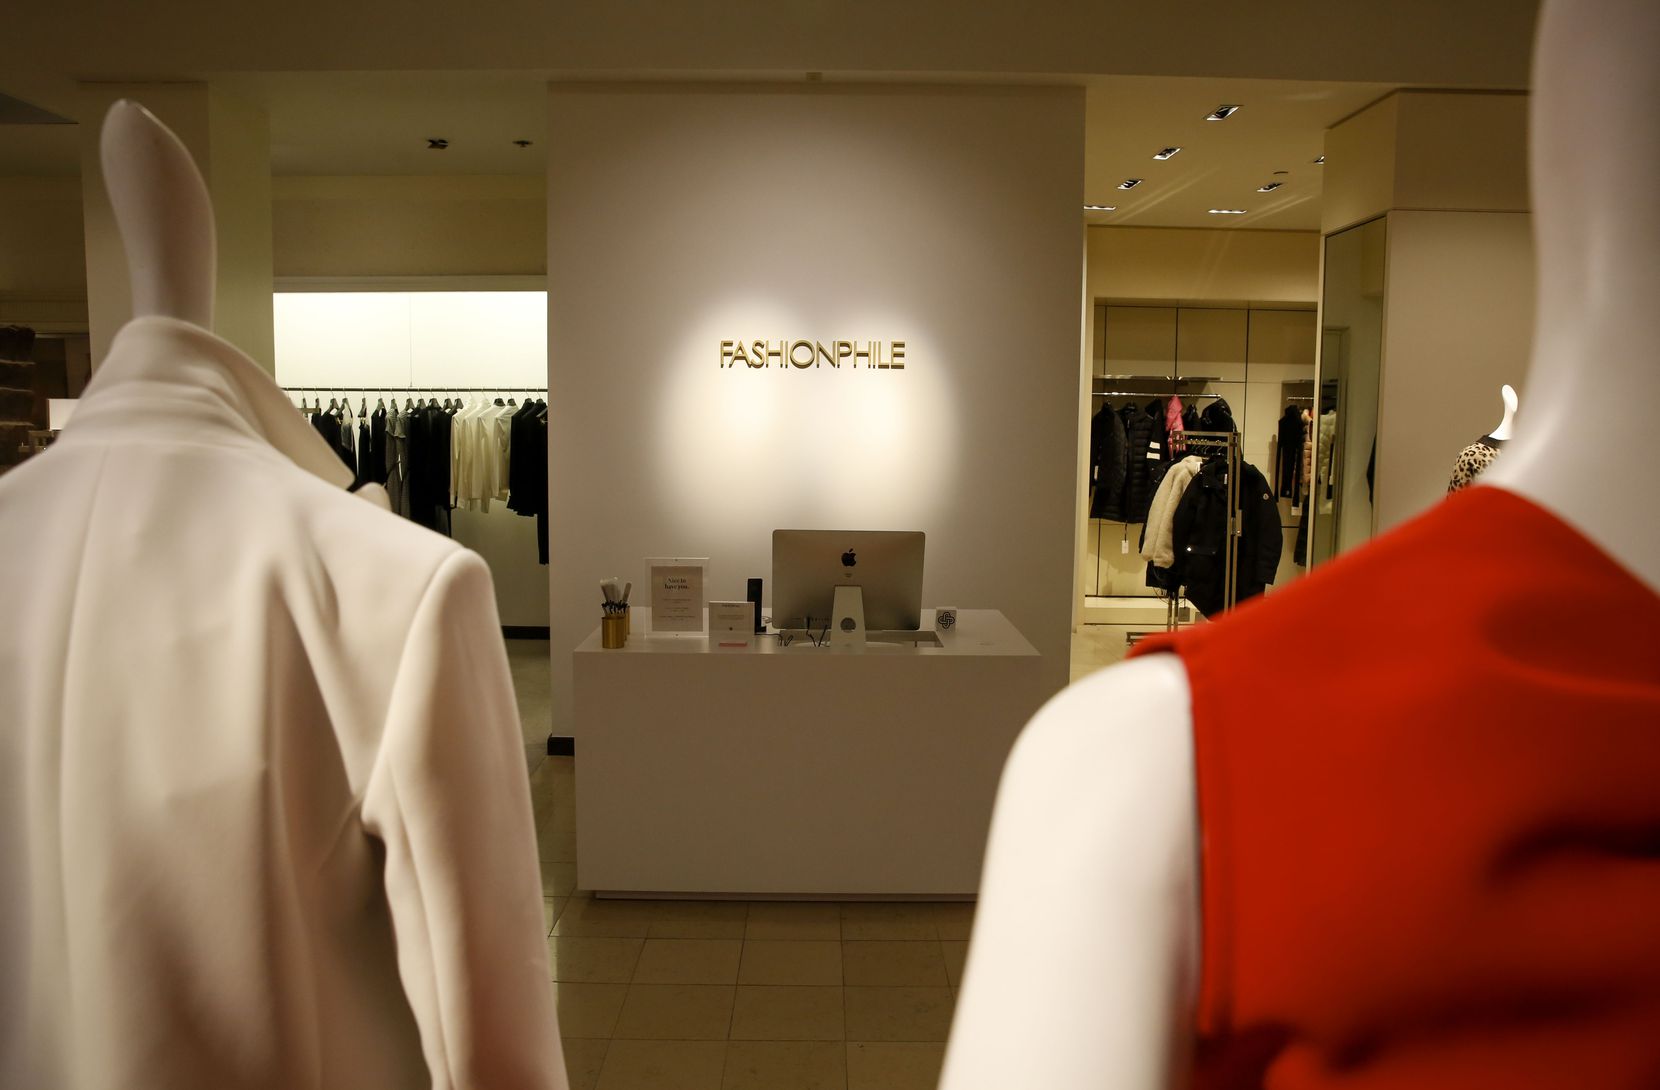 The Fashionphile location inside Neiman Marcus at NorthPark resells luxury handbags.